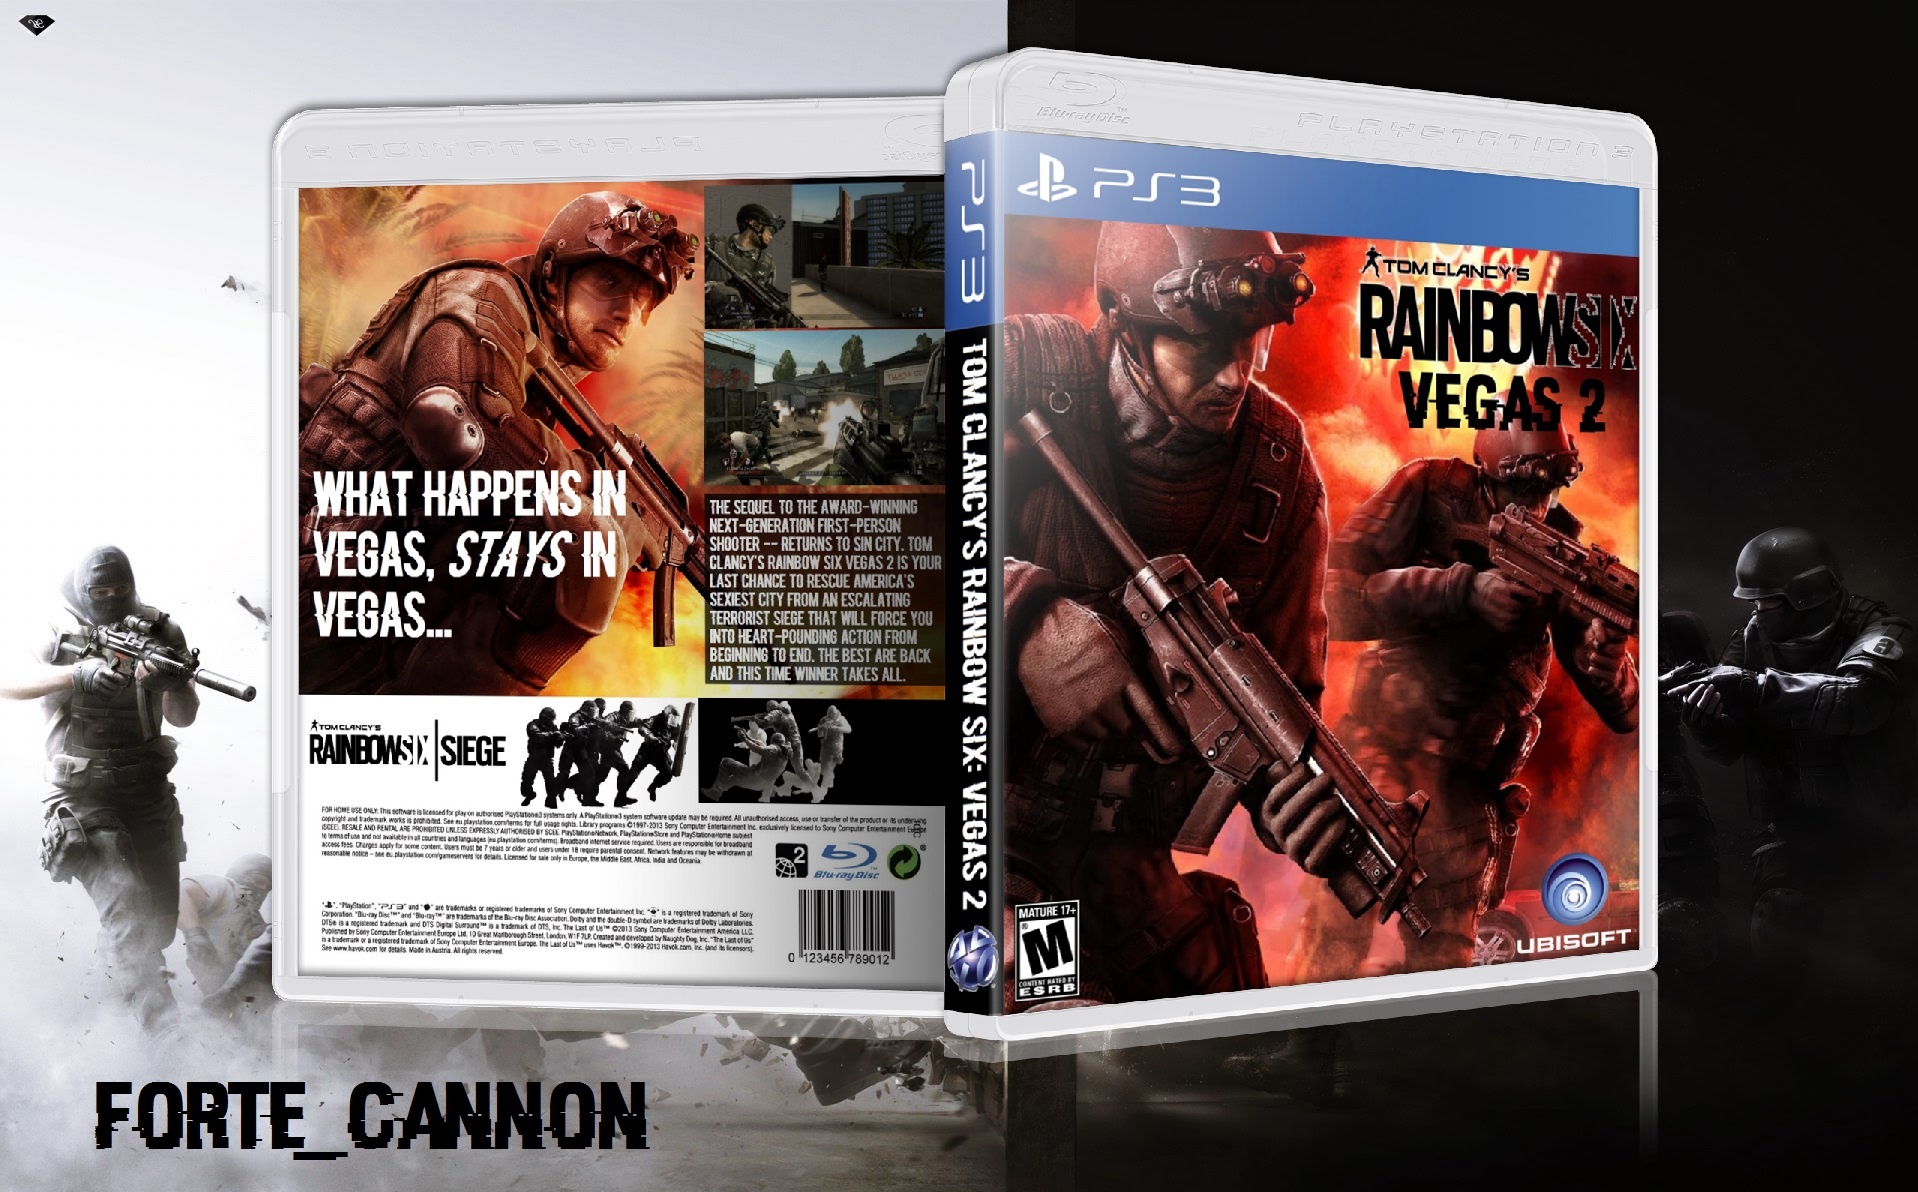 Tom Clancy's Rainbow Six Vegas 2 box cover